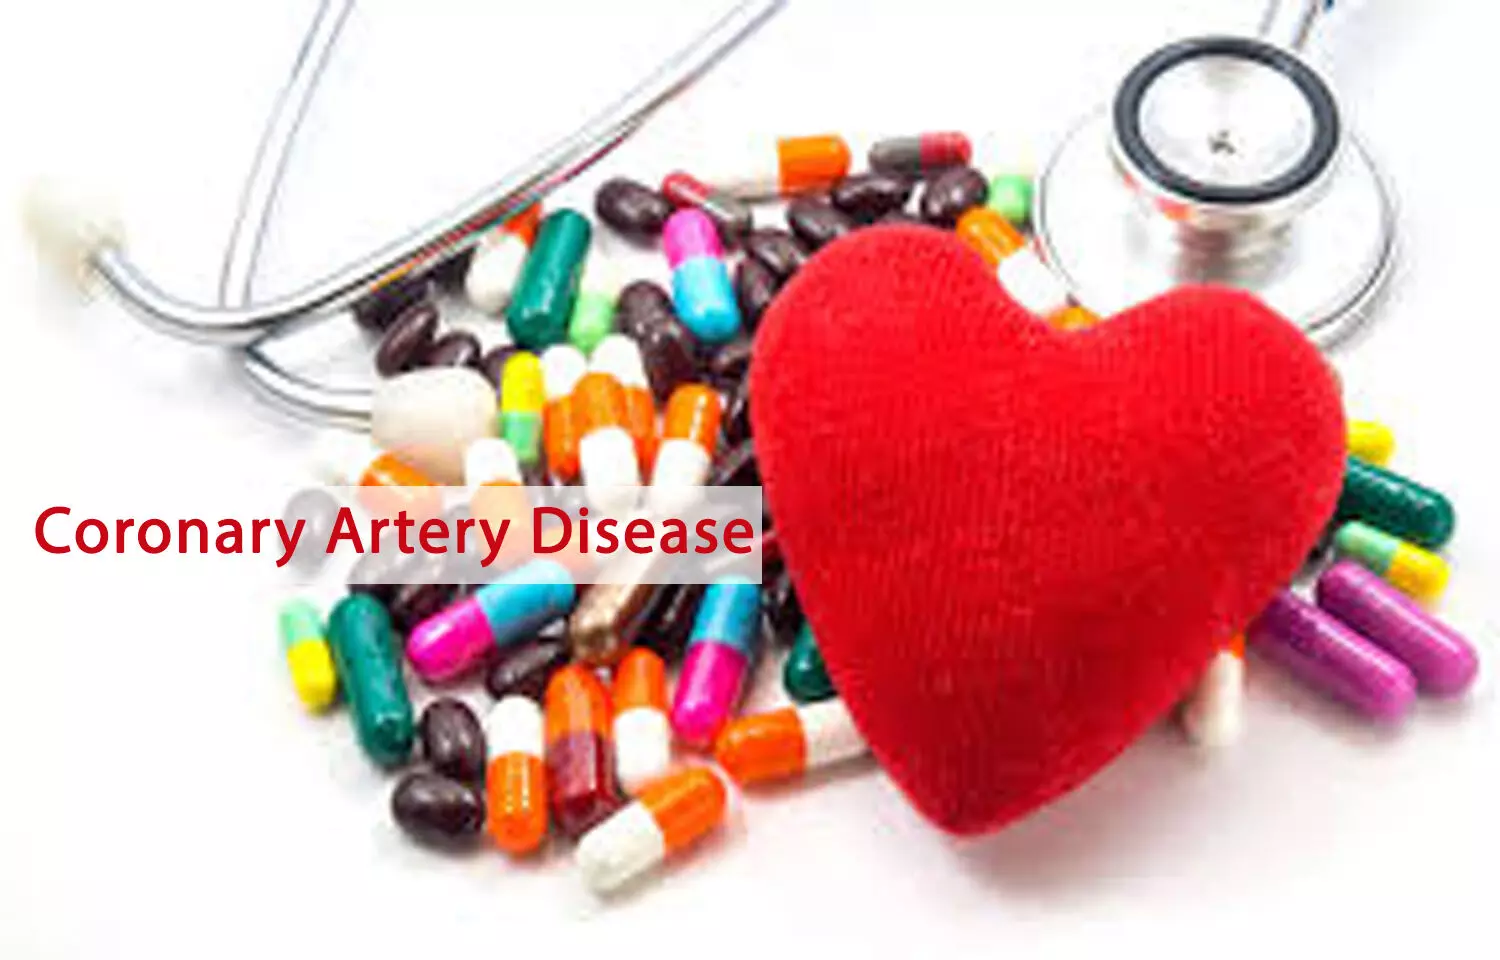 Phytosterols increase the risk of coronary artery disease